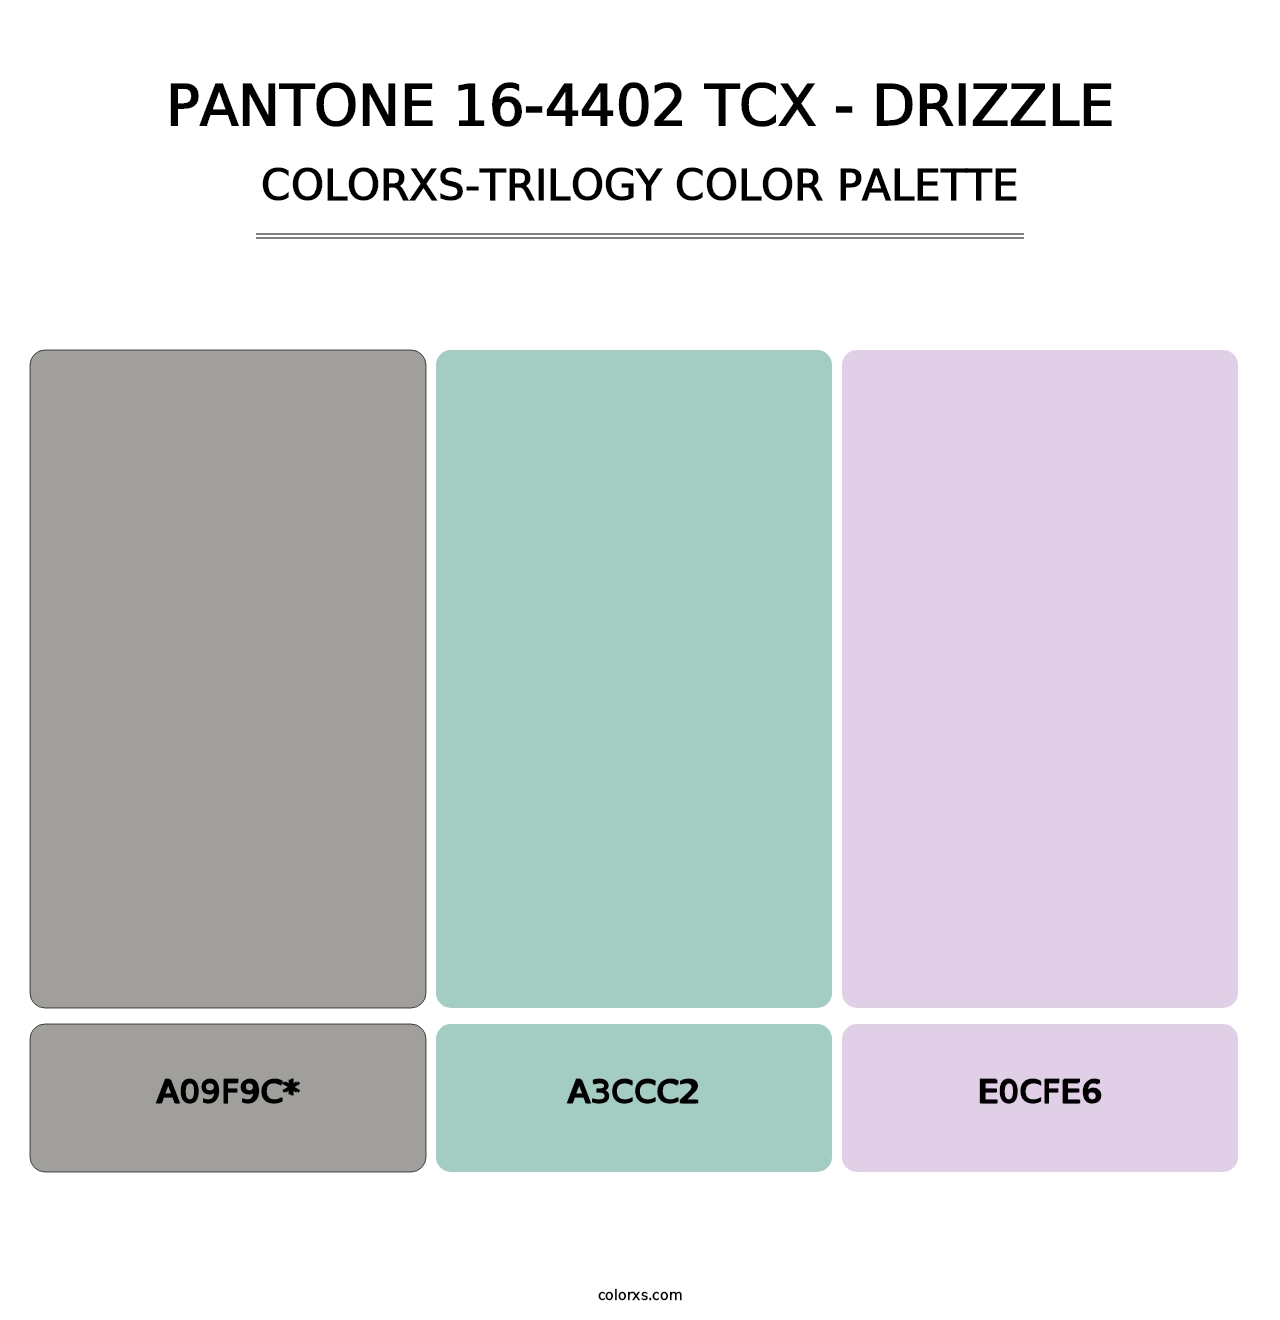 PANTONE 16-4402 TCX - Drizzle - Colorxs Trilogy Palette